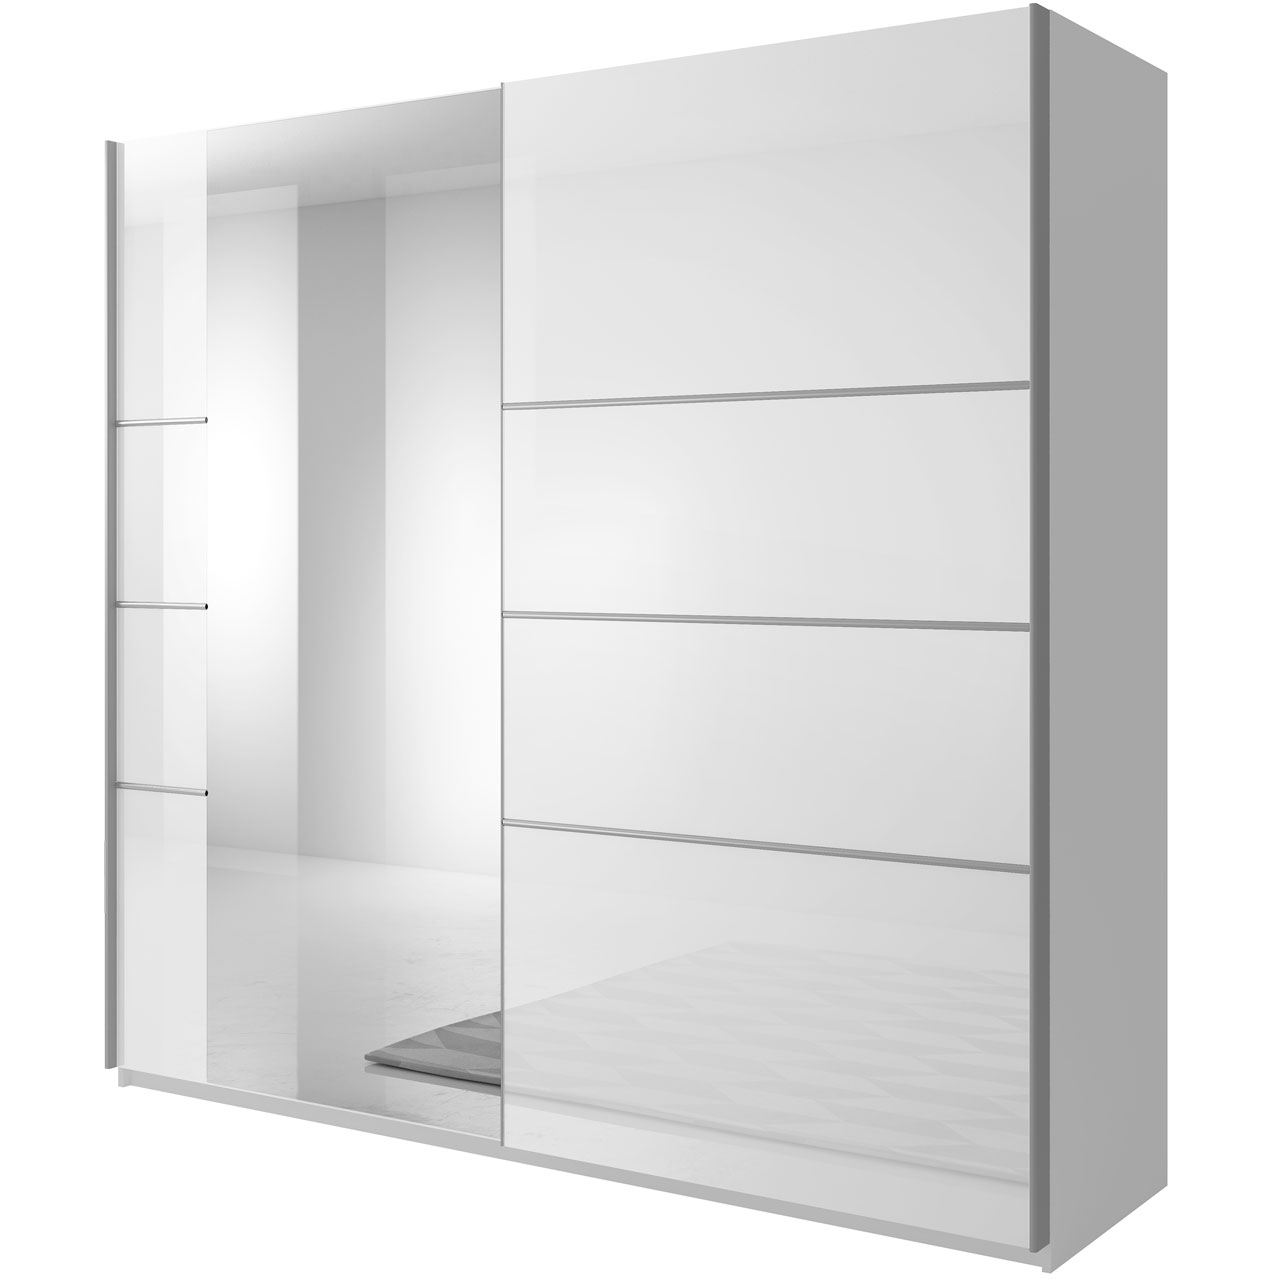 Sliding wardrobe with mirror BETA BE57 white gloss